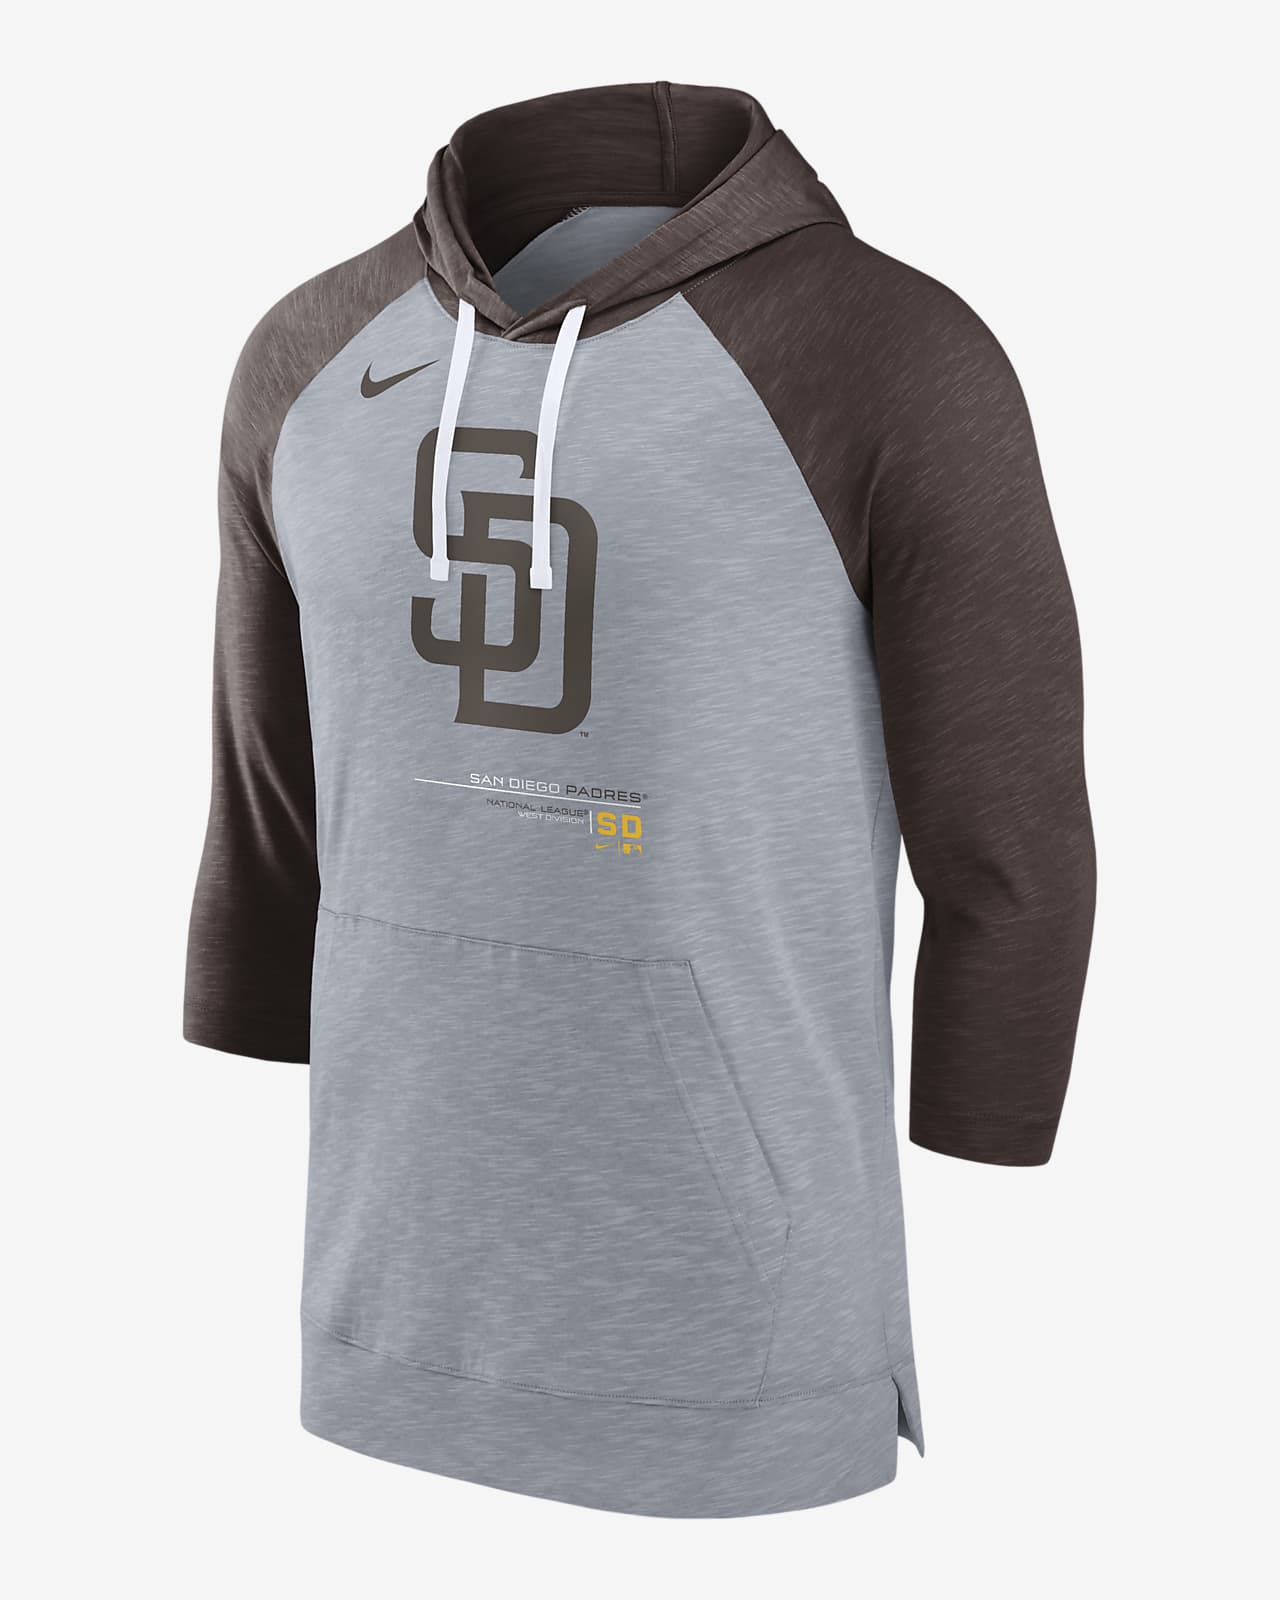 Nike Baseball (MLB San Diego Padres) Men's 3/4-Sleeve Pullover